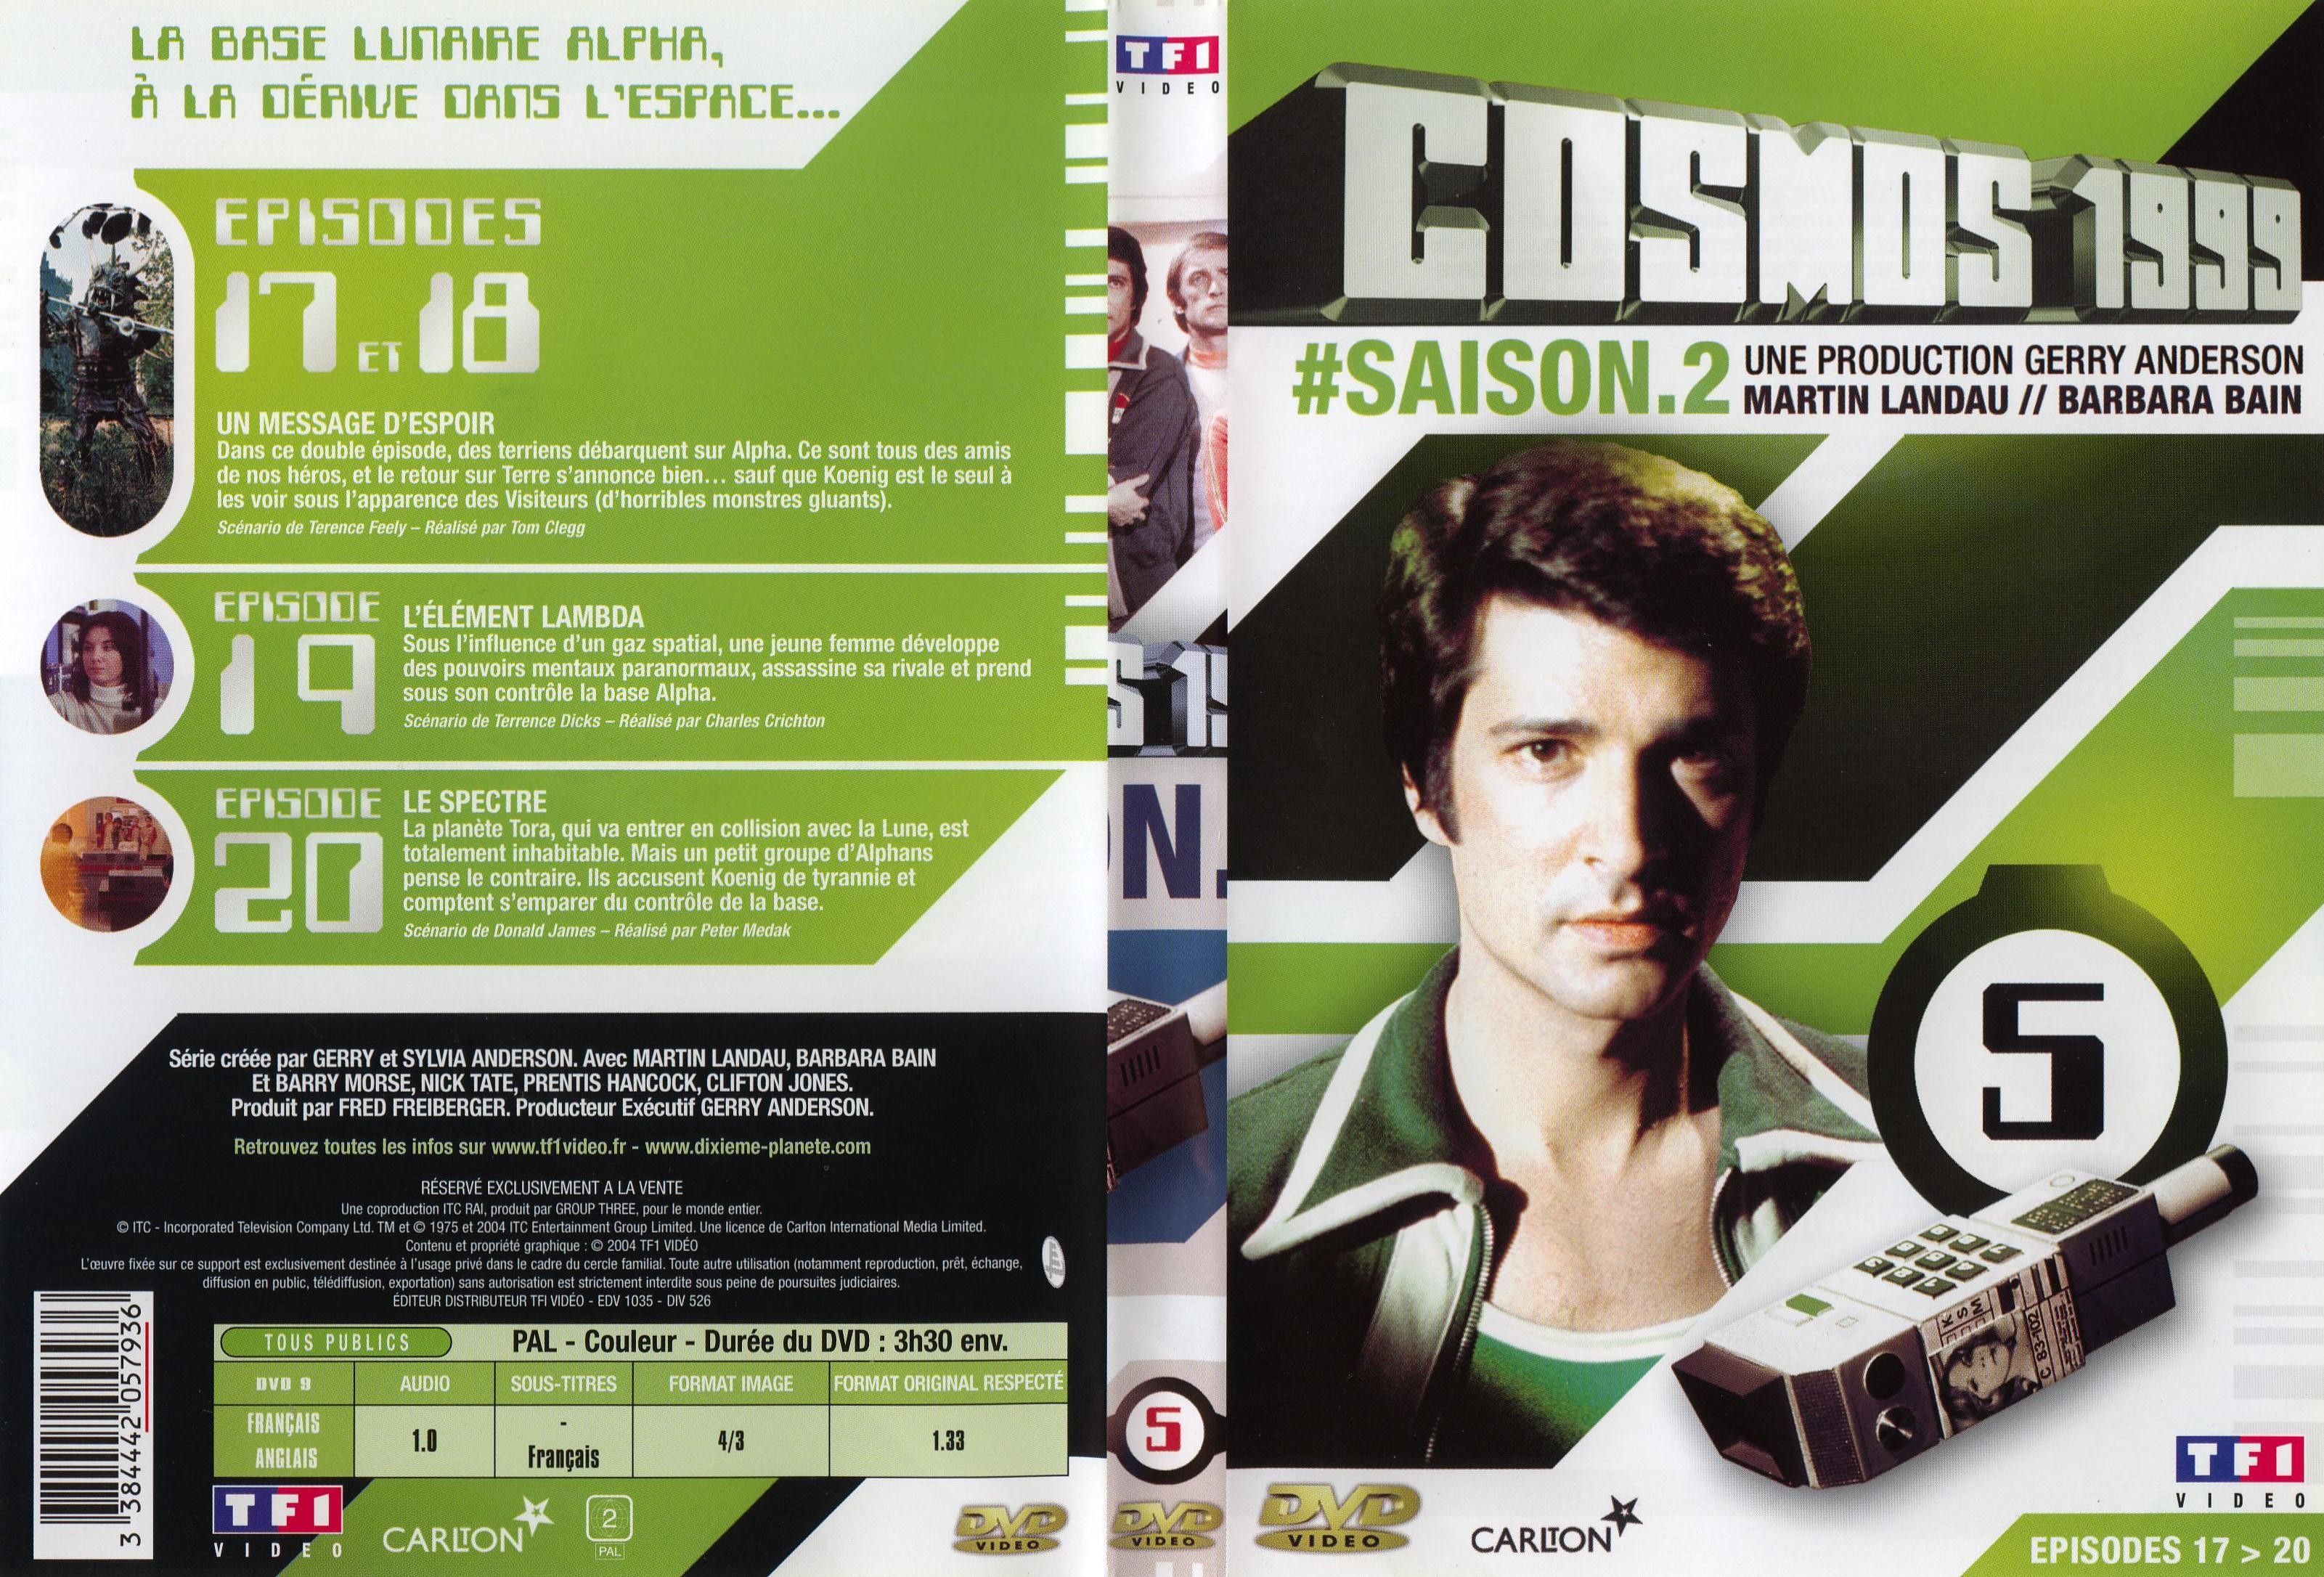 Jaquette DVD Cosmos 1999 saison 2 dvd 5